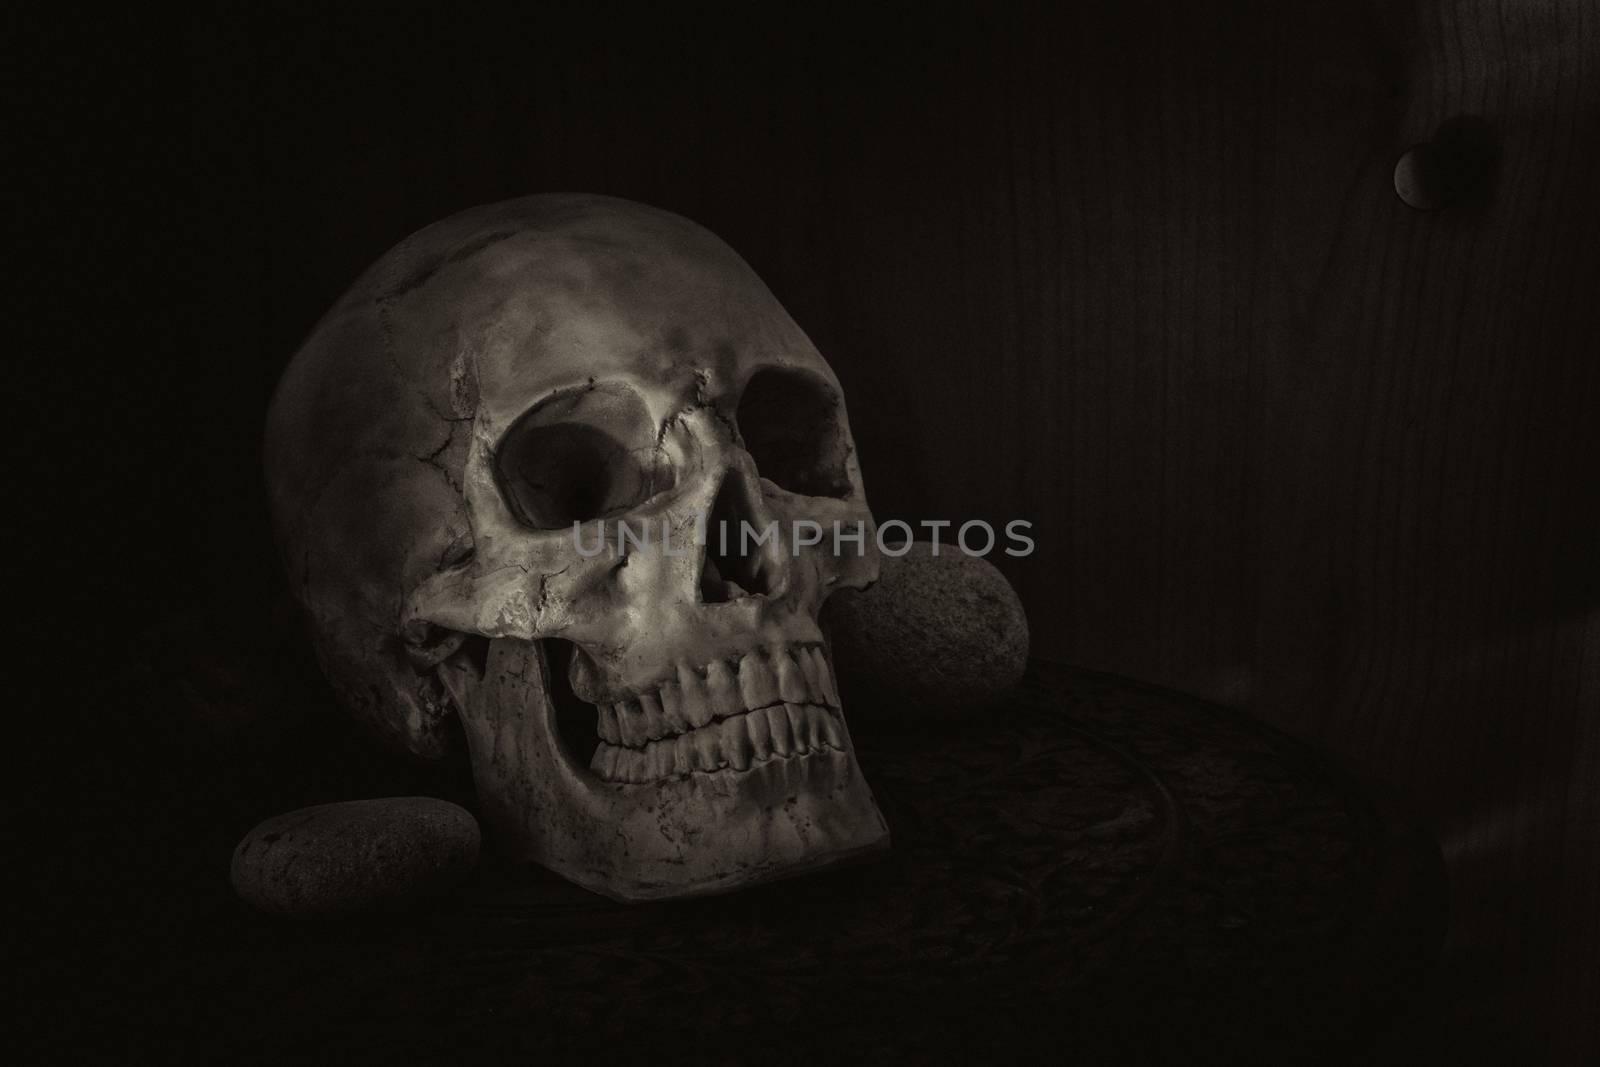 Still life photography with human skull